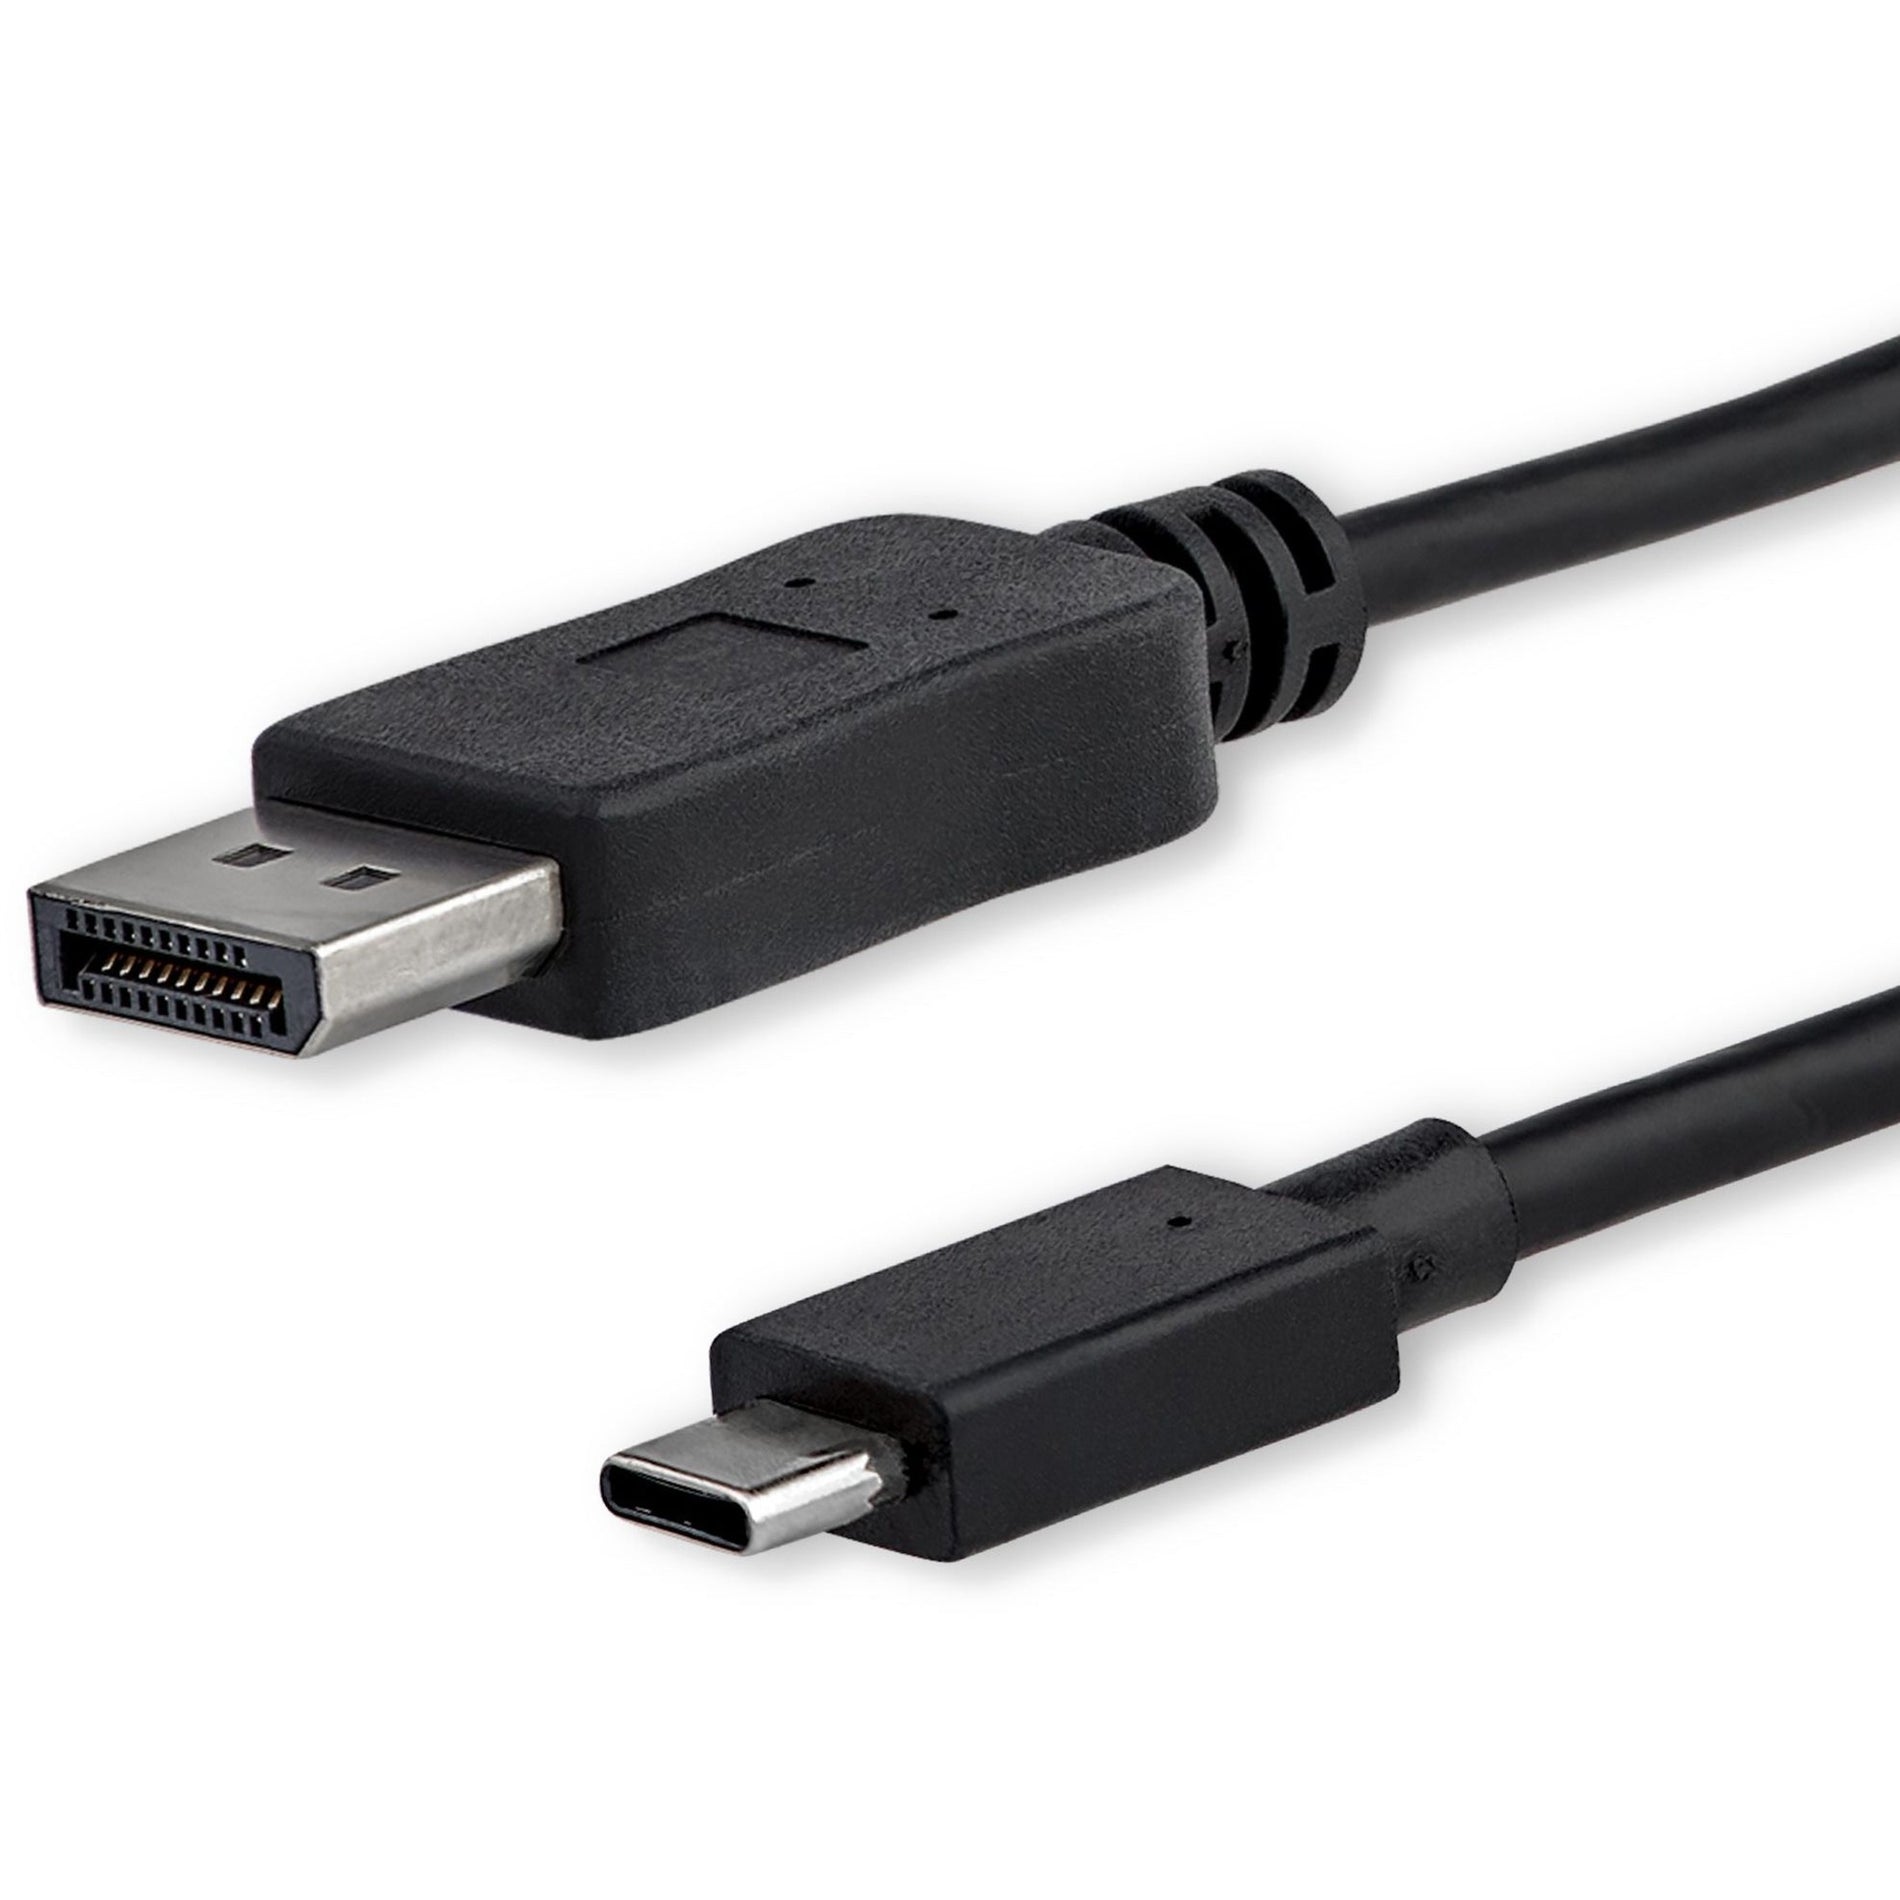 StarTech.com CDP2DPMM6B USB-C to DisplayPort Adapter Cable - USB Type-C to DP Converter, 6ft 4K 60Hz Black